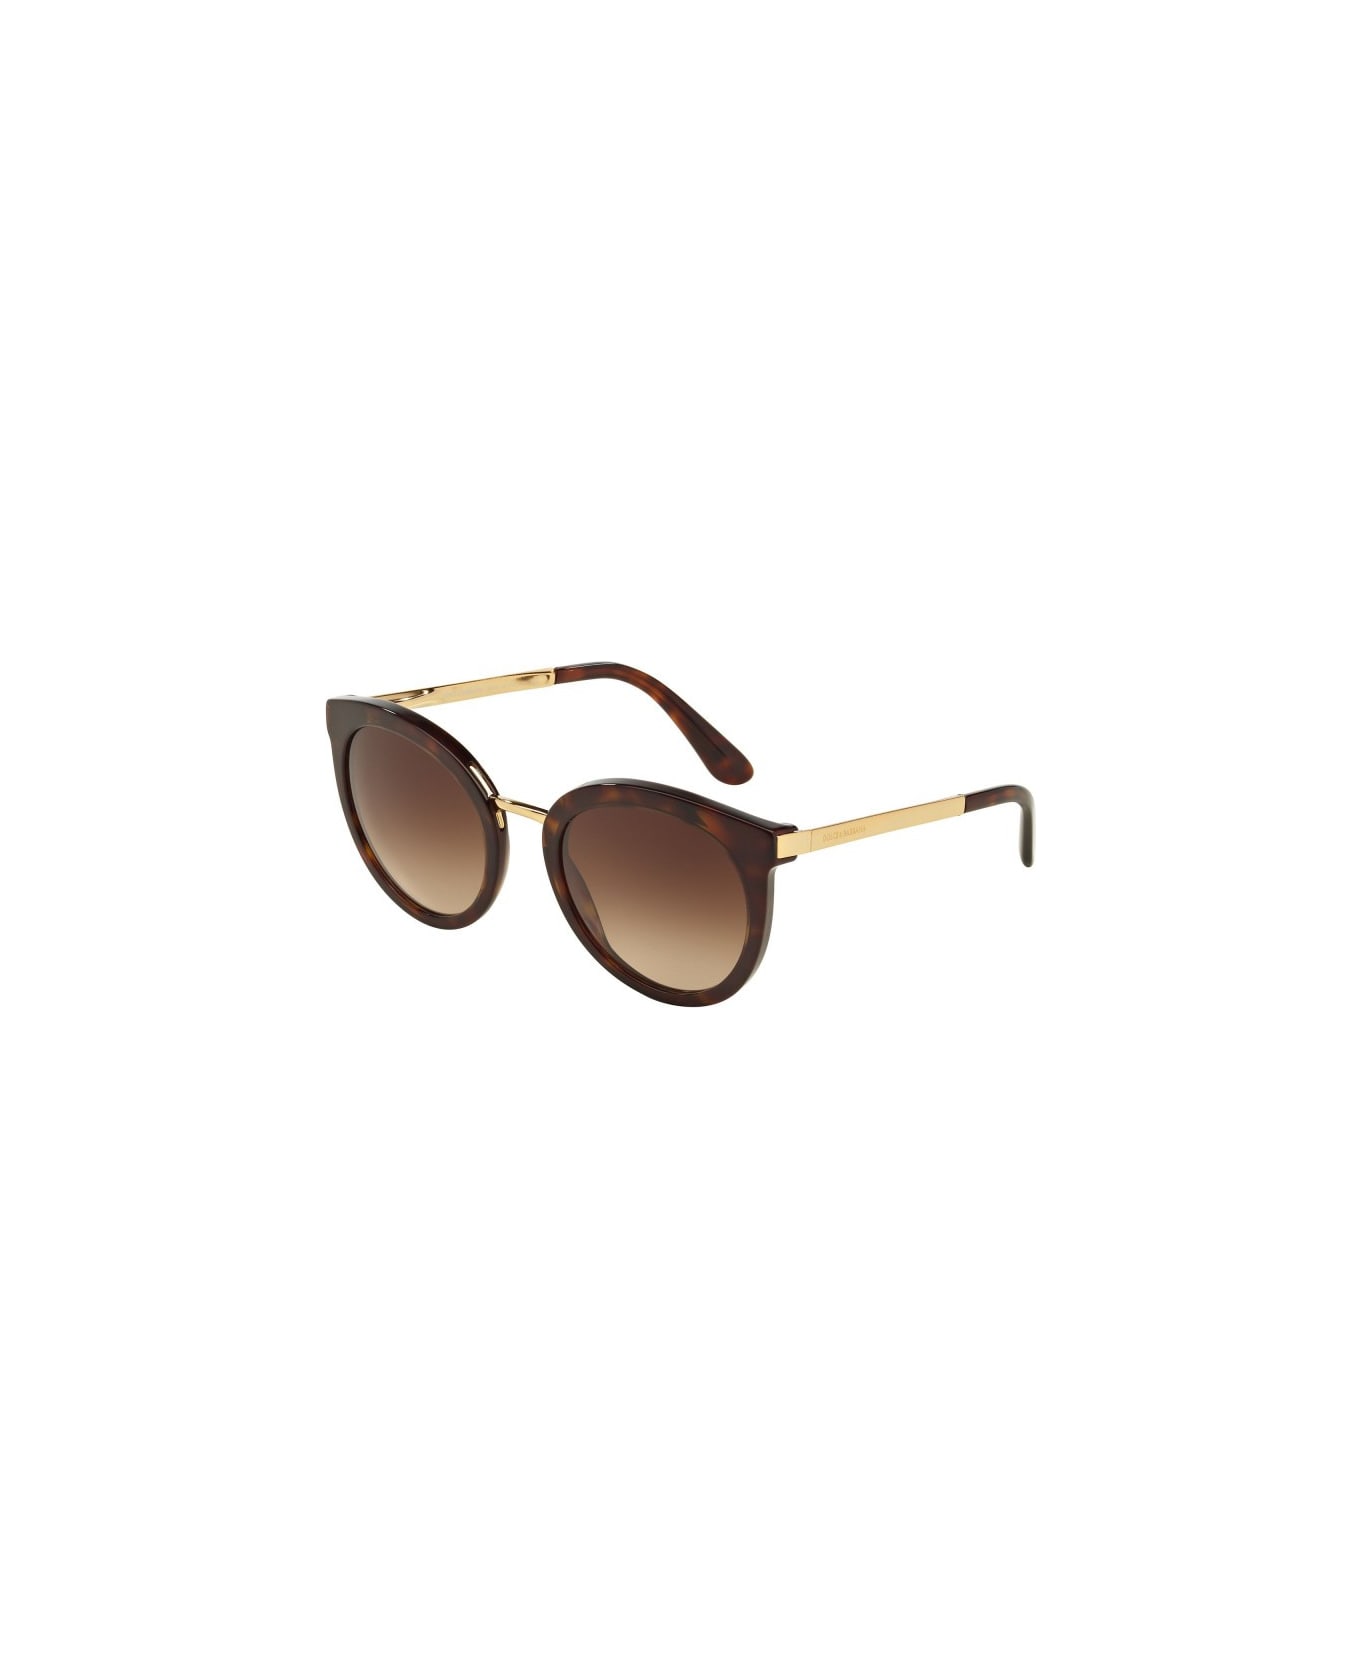 Dolce & Gabbana Eyewear dg4268 502/13 Sunglasses